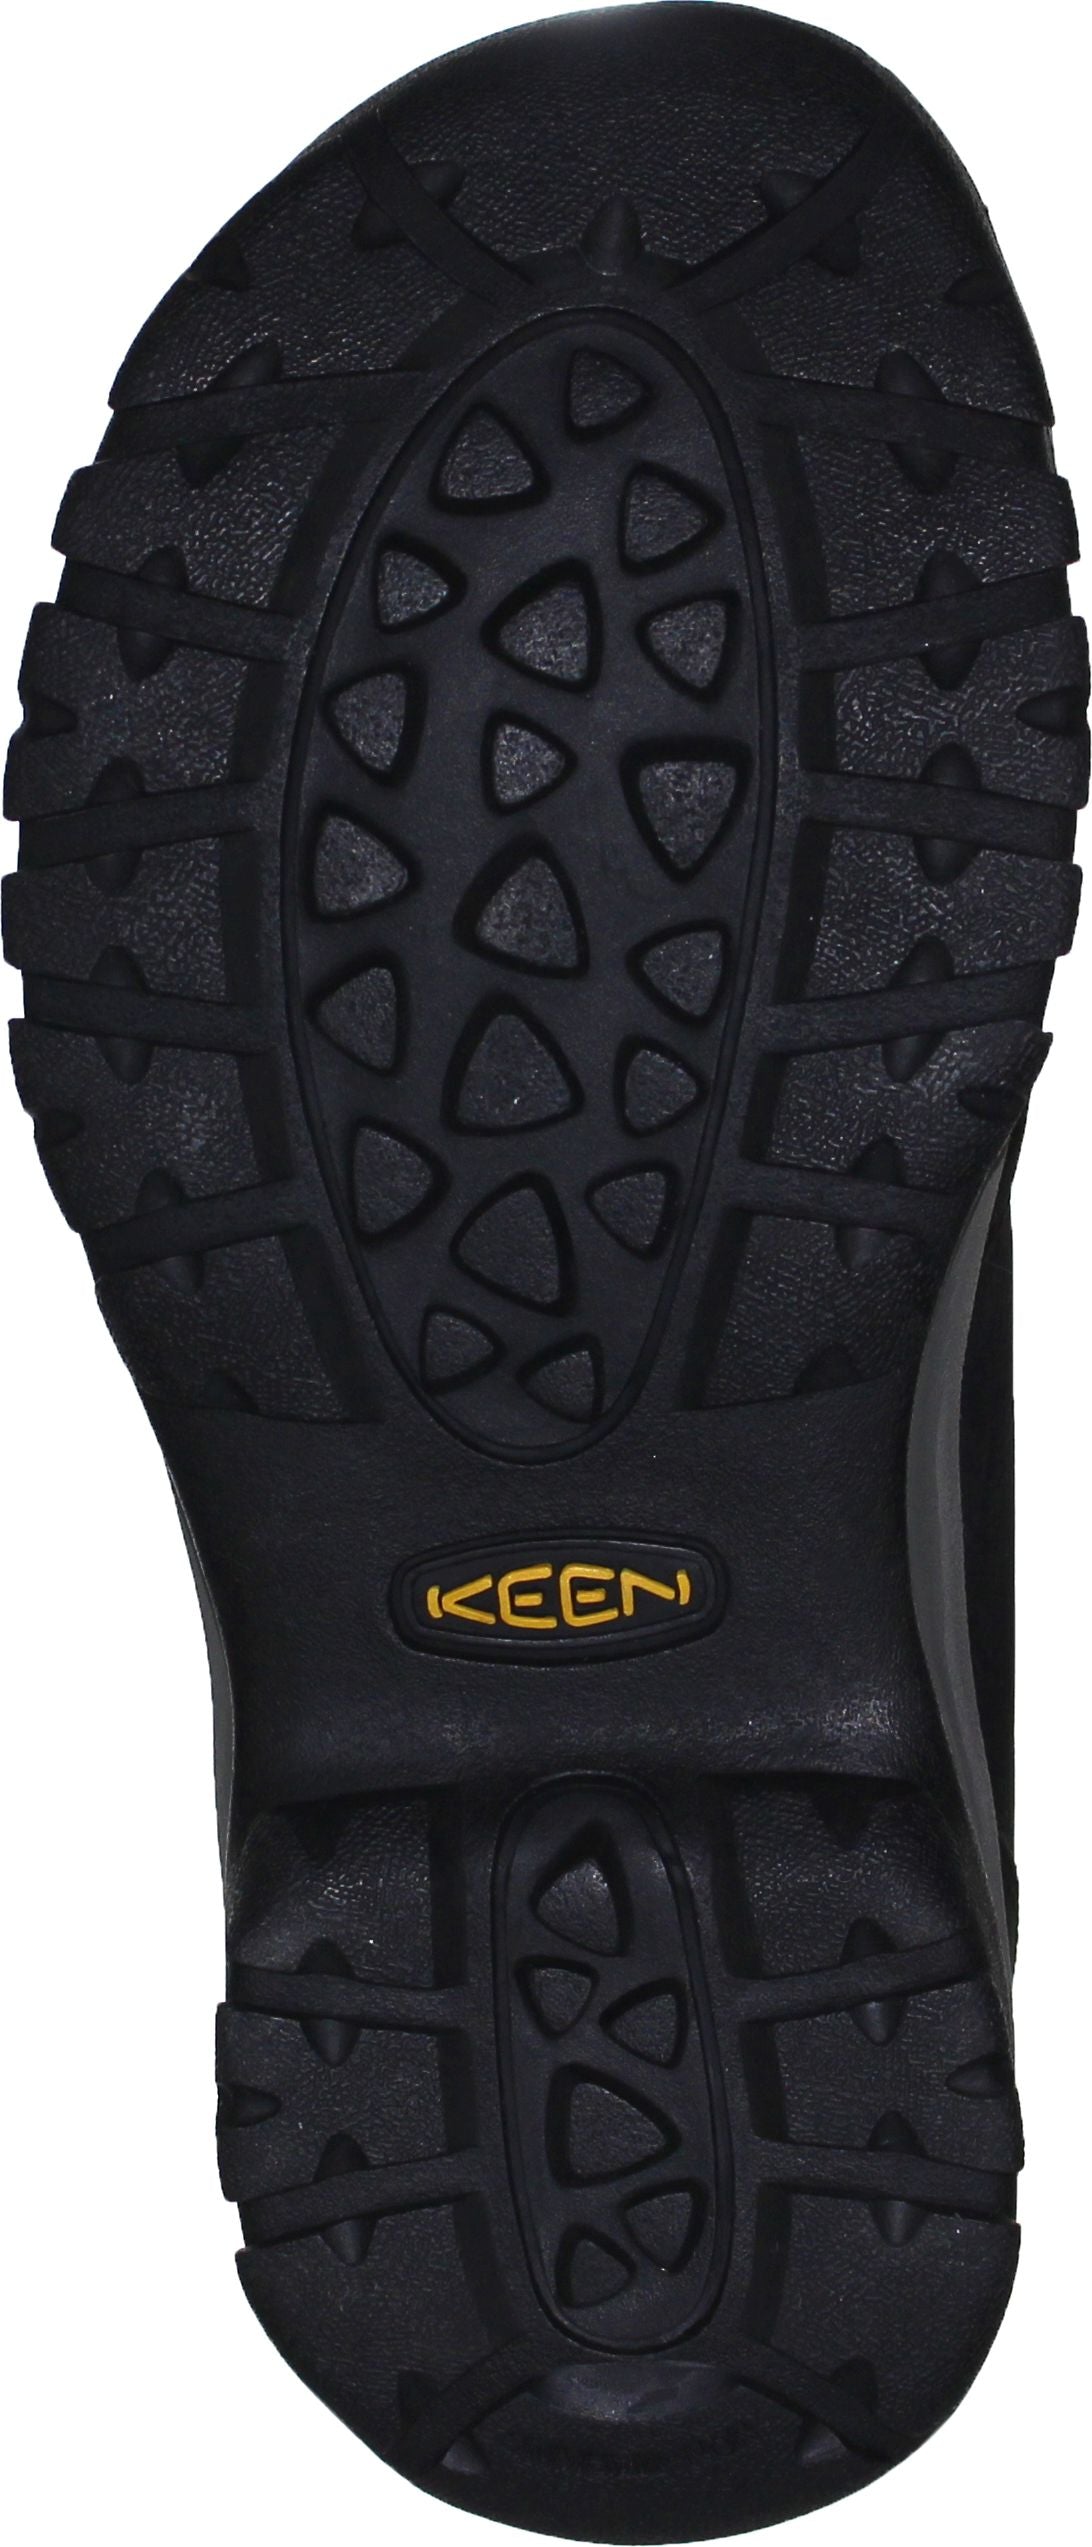 KEEN Boots Kaci Ii Winter Mid Waterproof Black